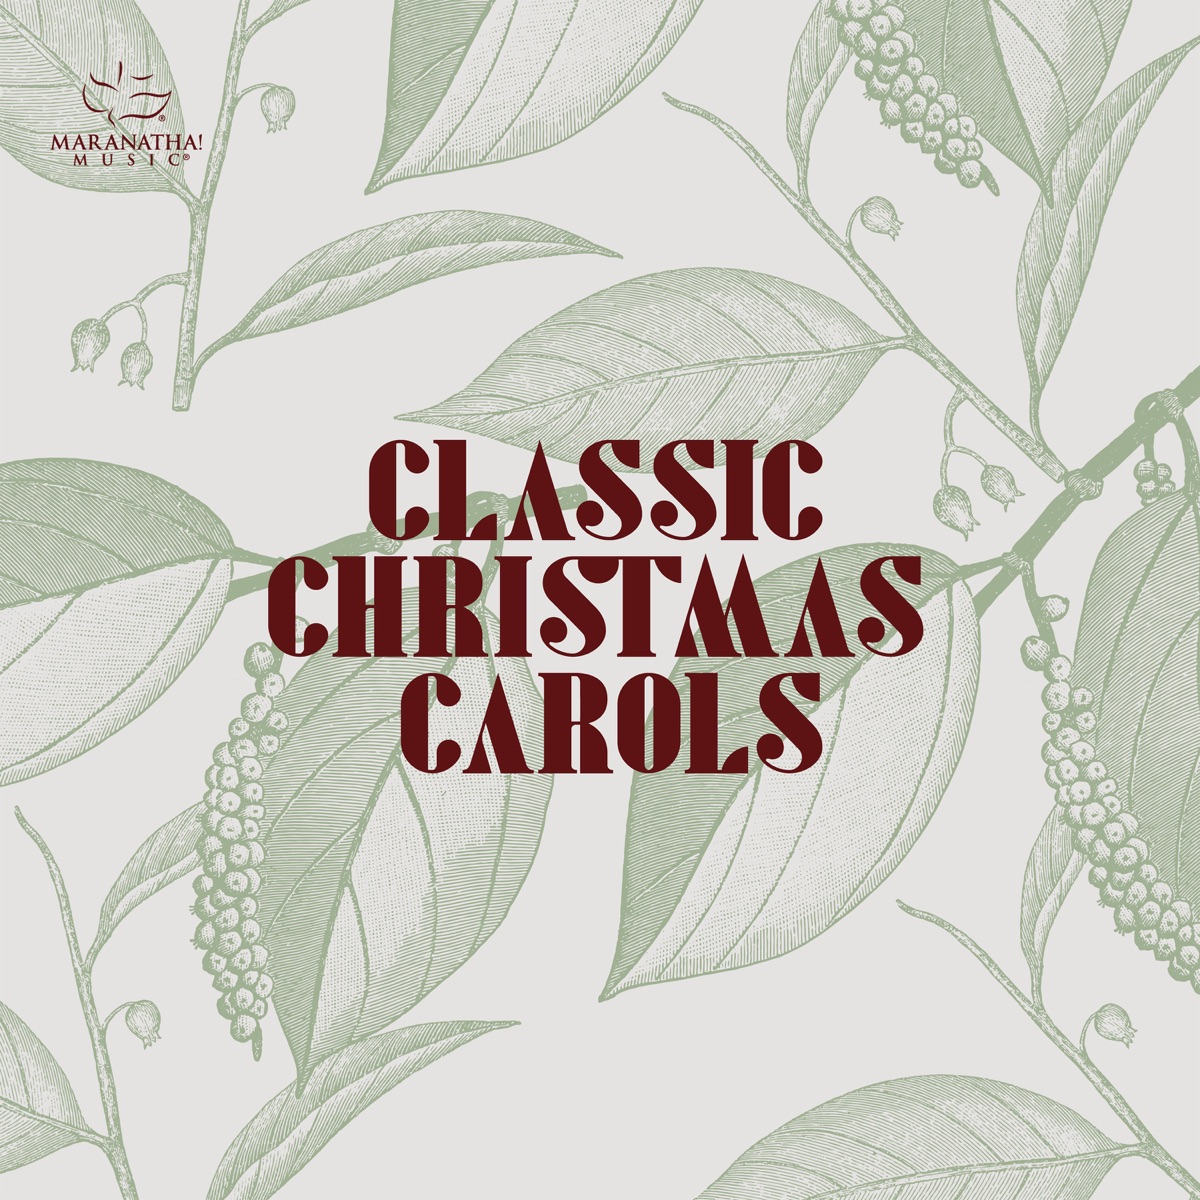 Top 25 Christmas Carols - Album by Maranatha! Christmas - Apple Music